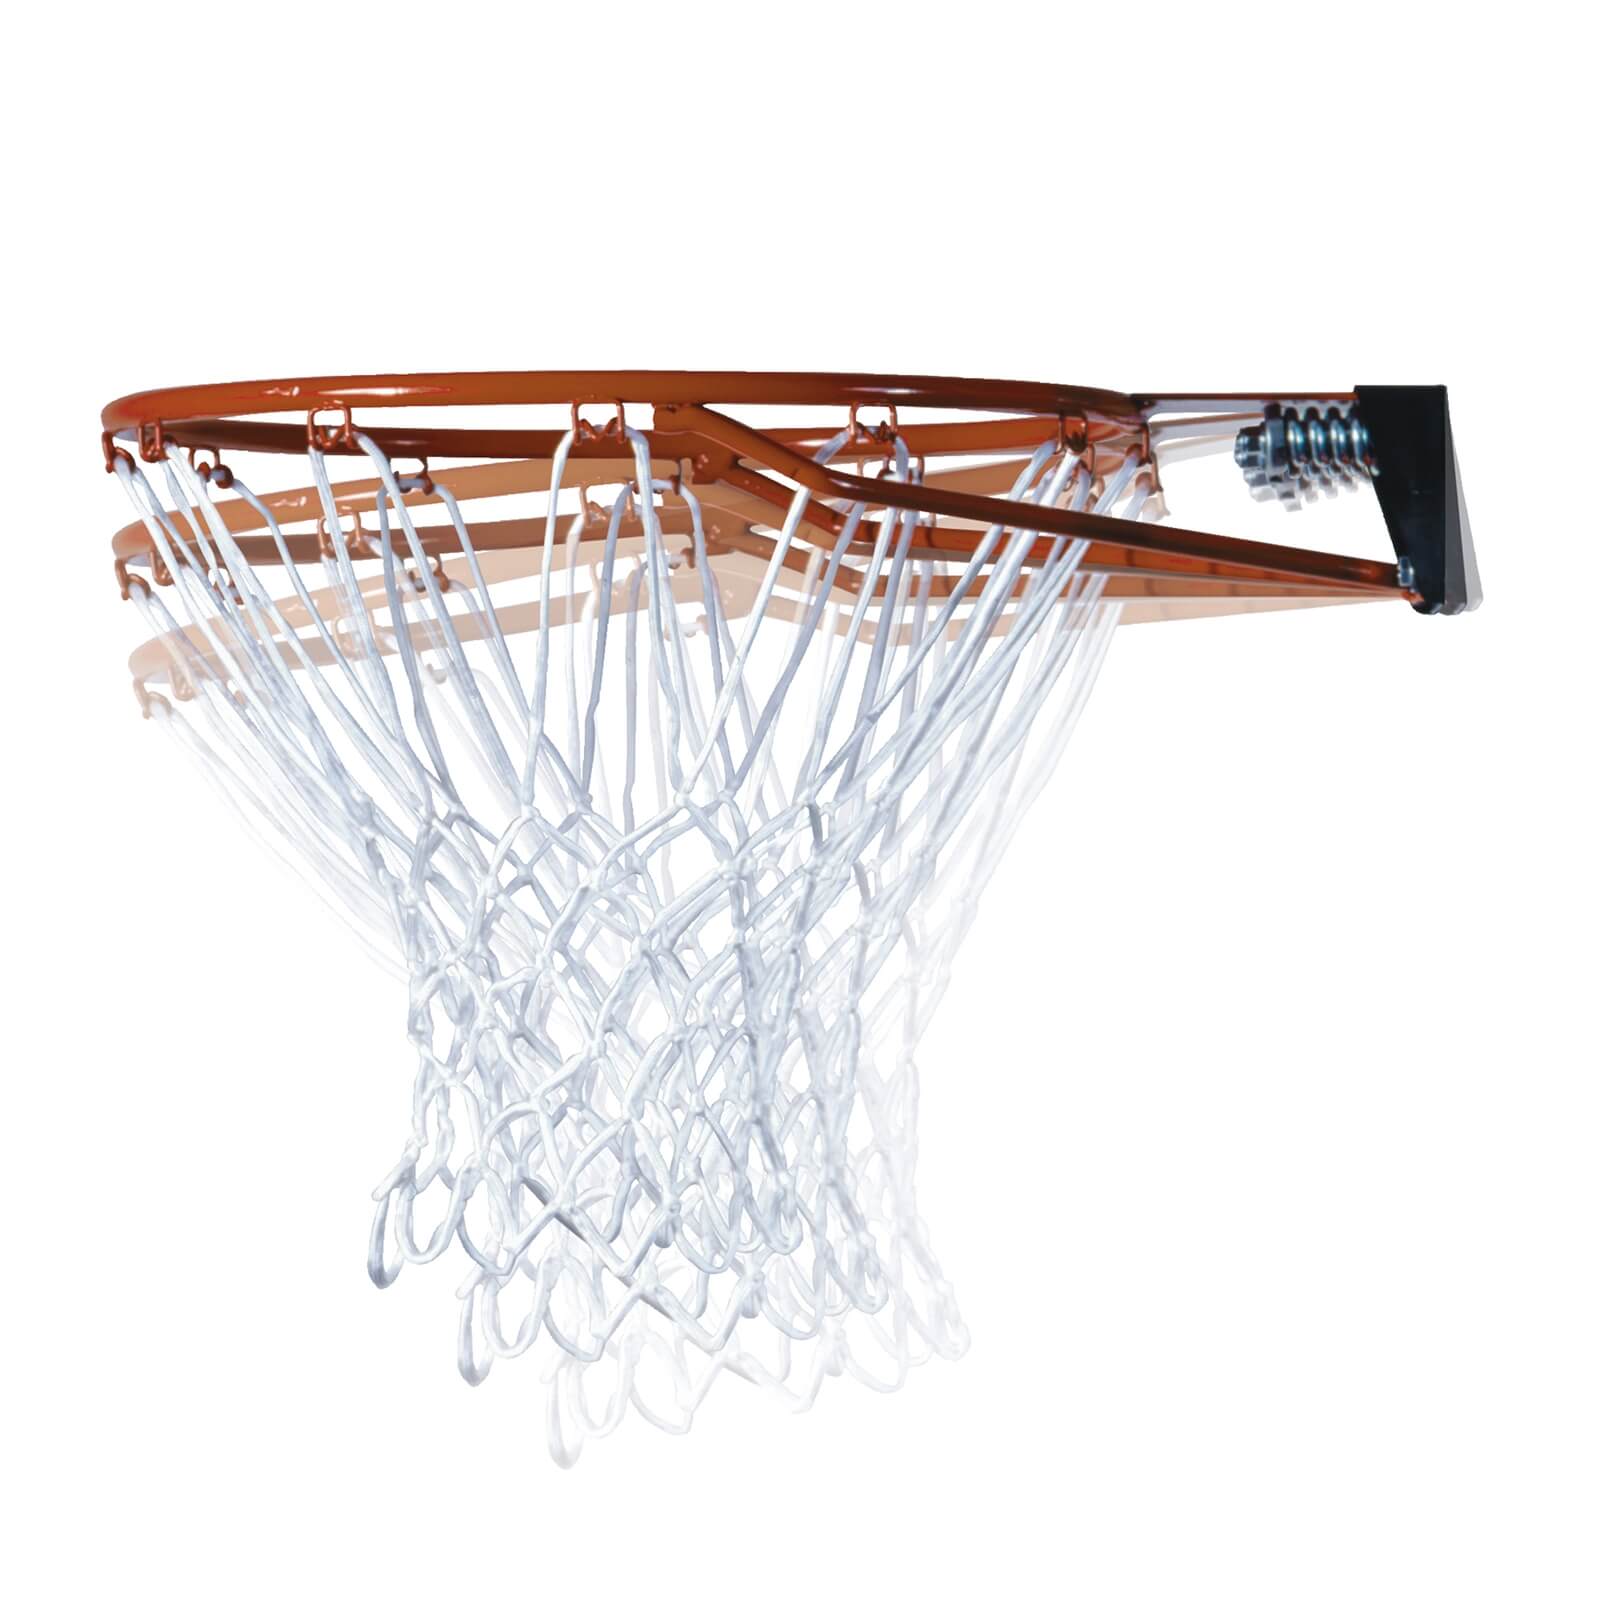 Lifetime 52 Adjustable Inground Basketball Hoop